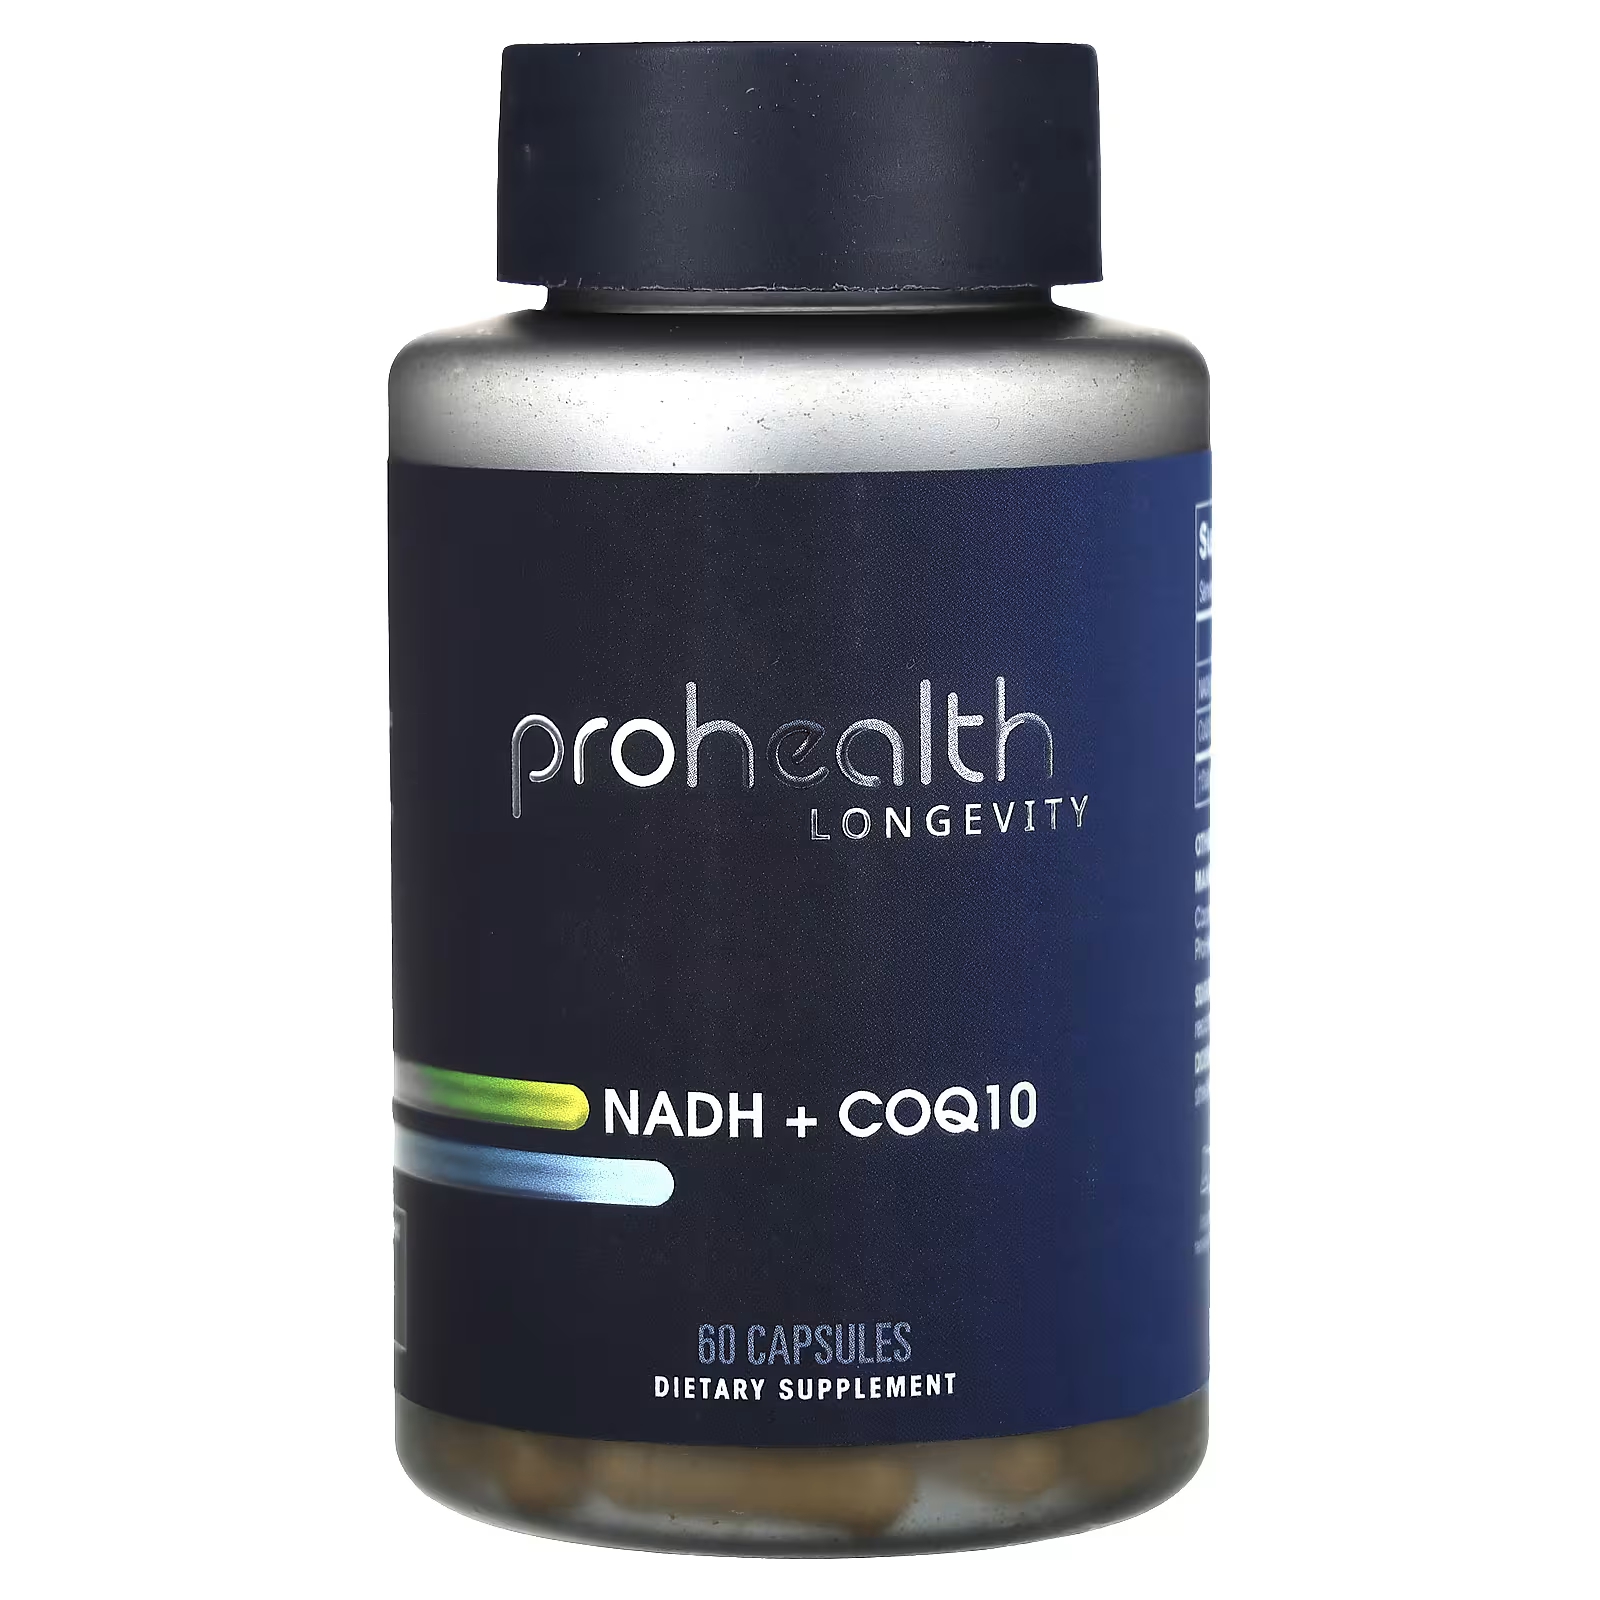 Пищевая добавка ProHealth Longevity НАДН + CoQ10, 60 капсул prohealth longevity nadh coq10 60 вегетарианских капсул